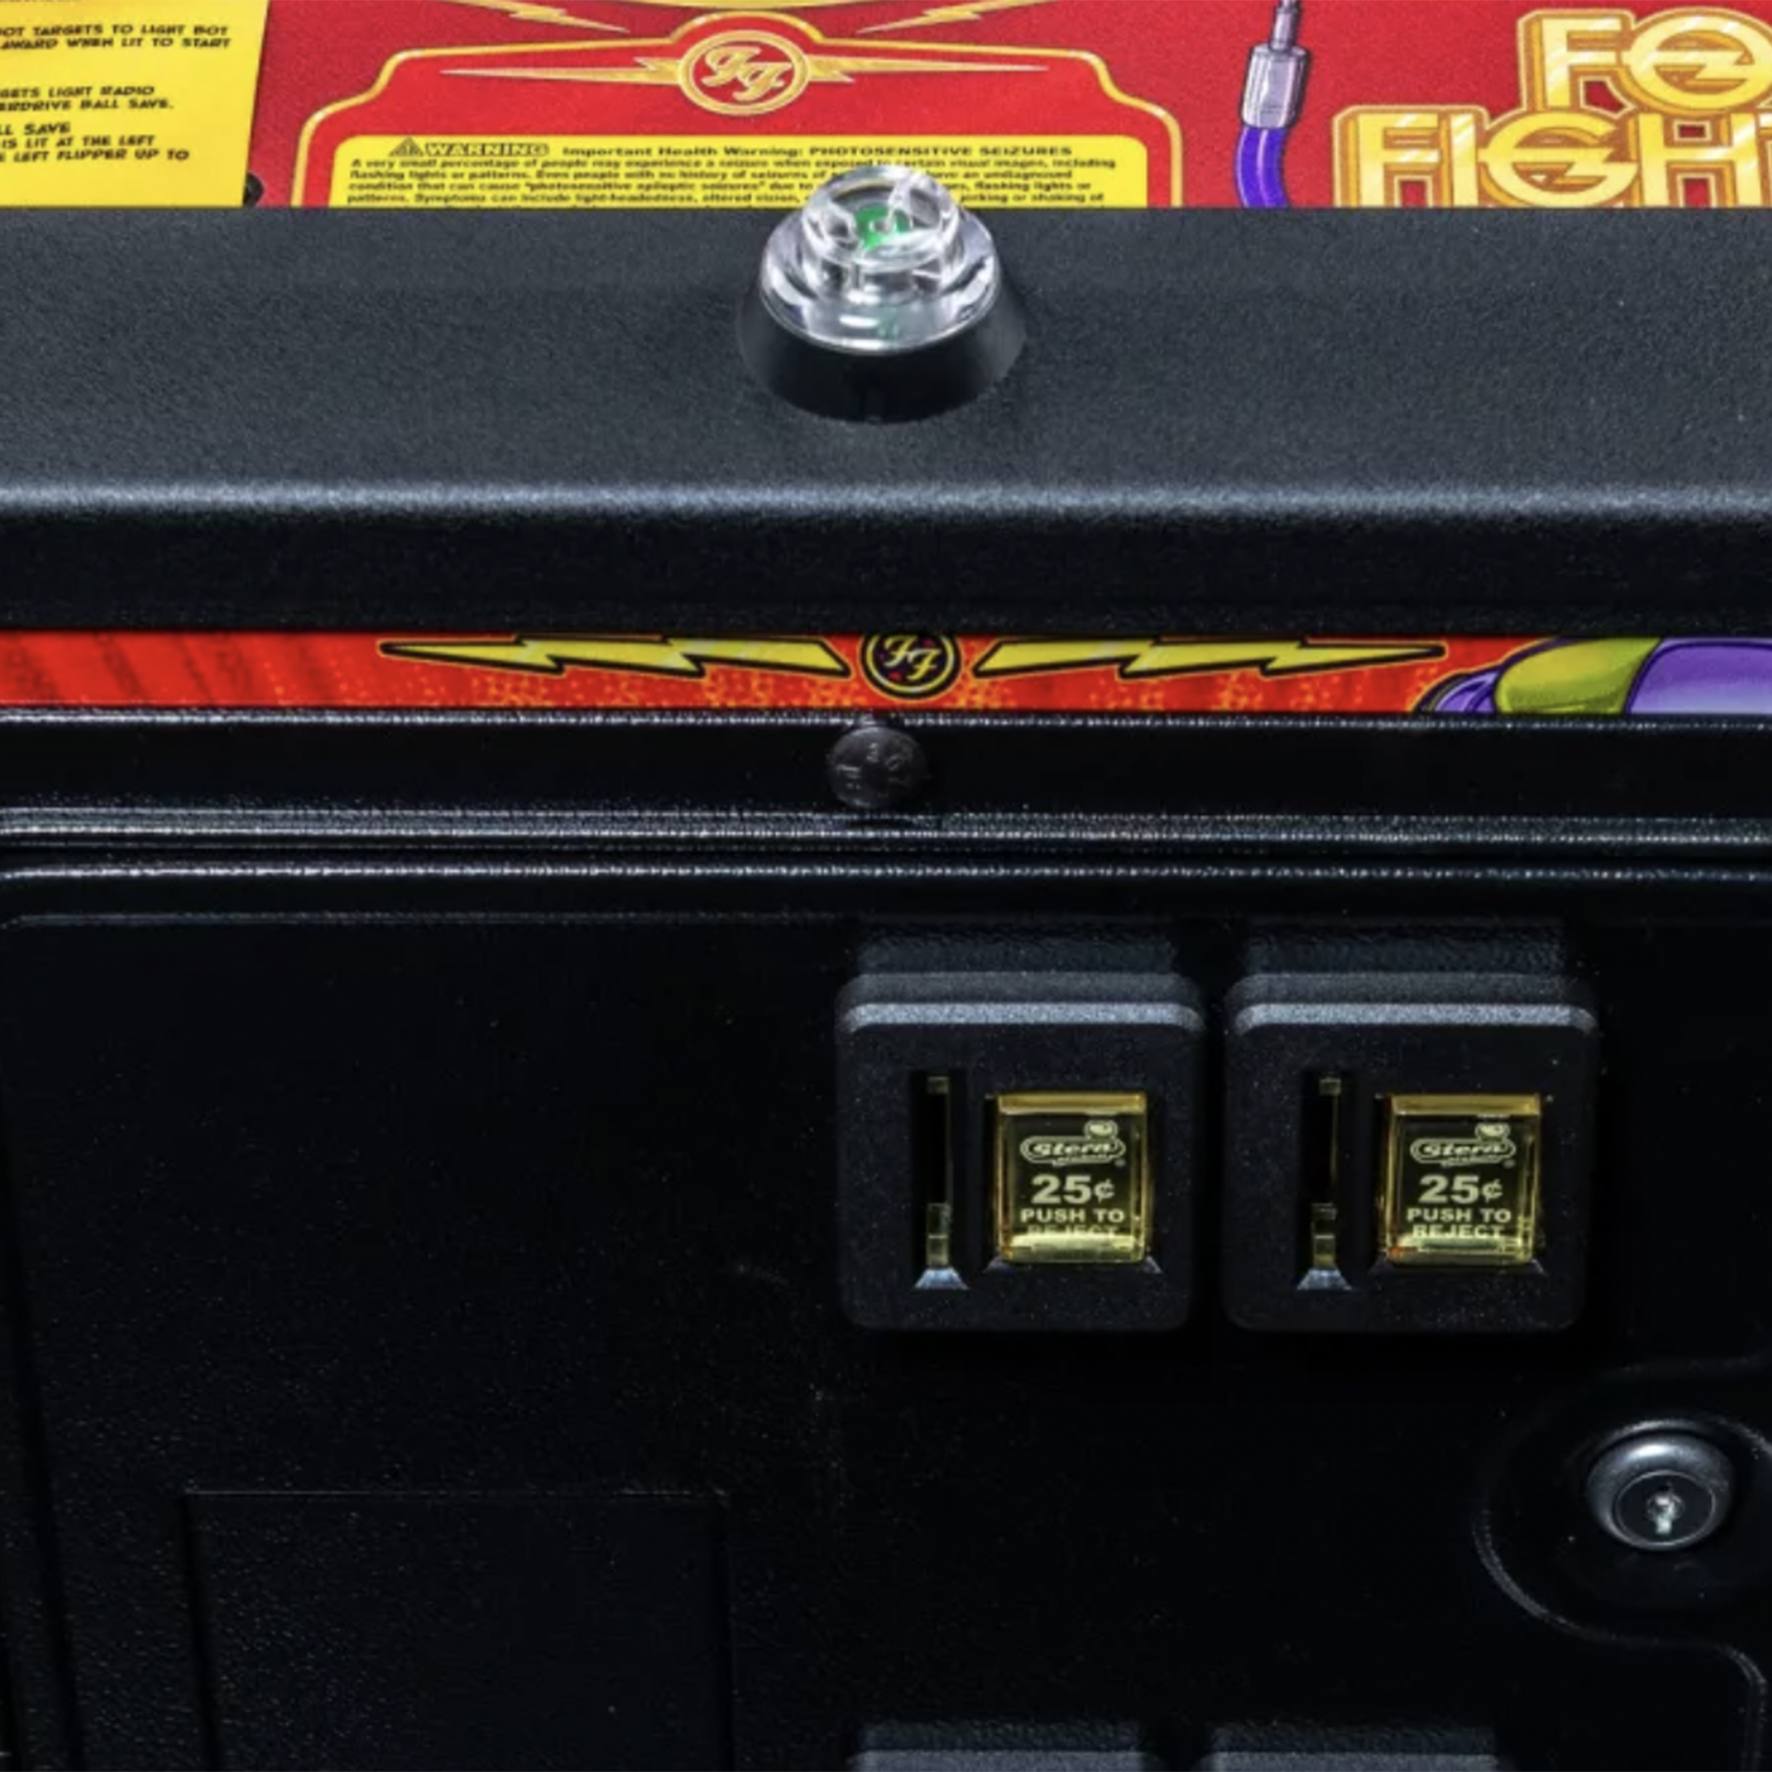 Foo Fighters Premium Pinball Machine by Stern